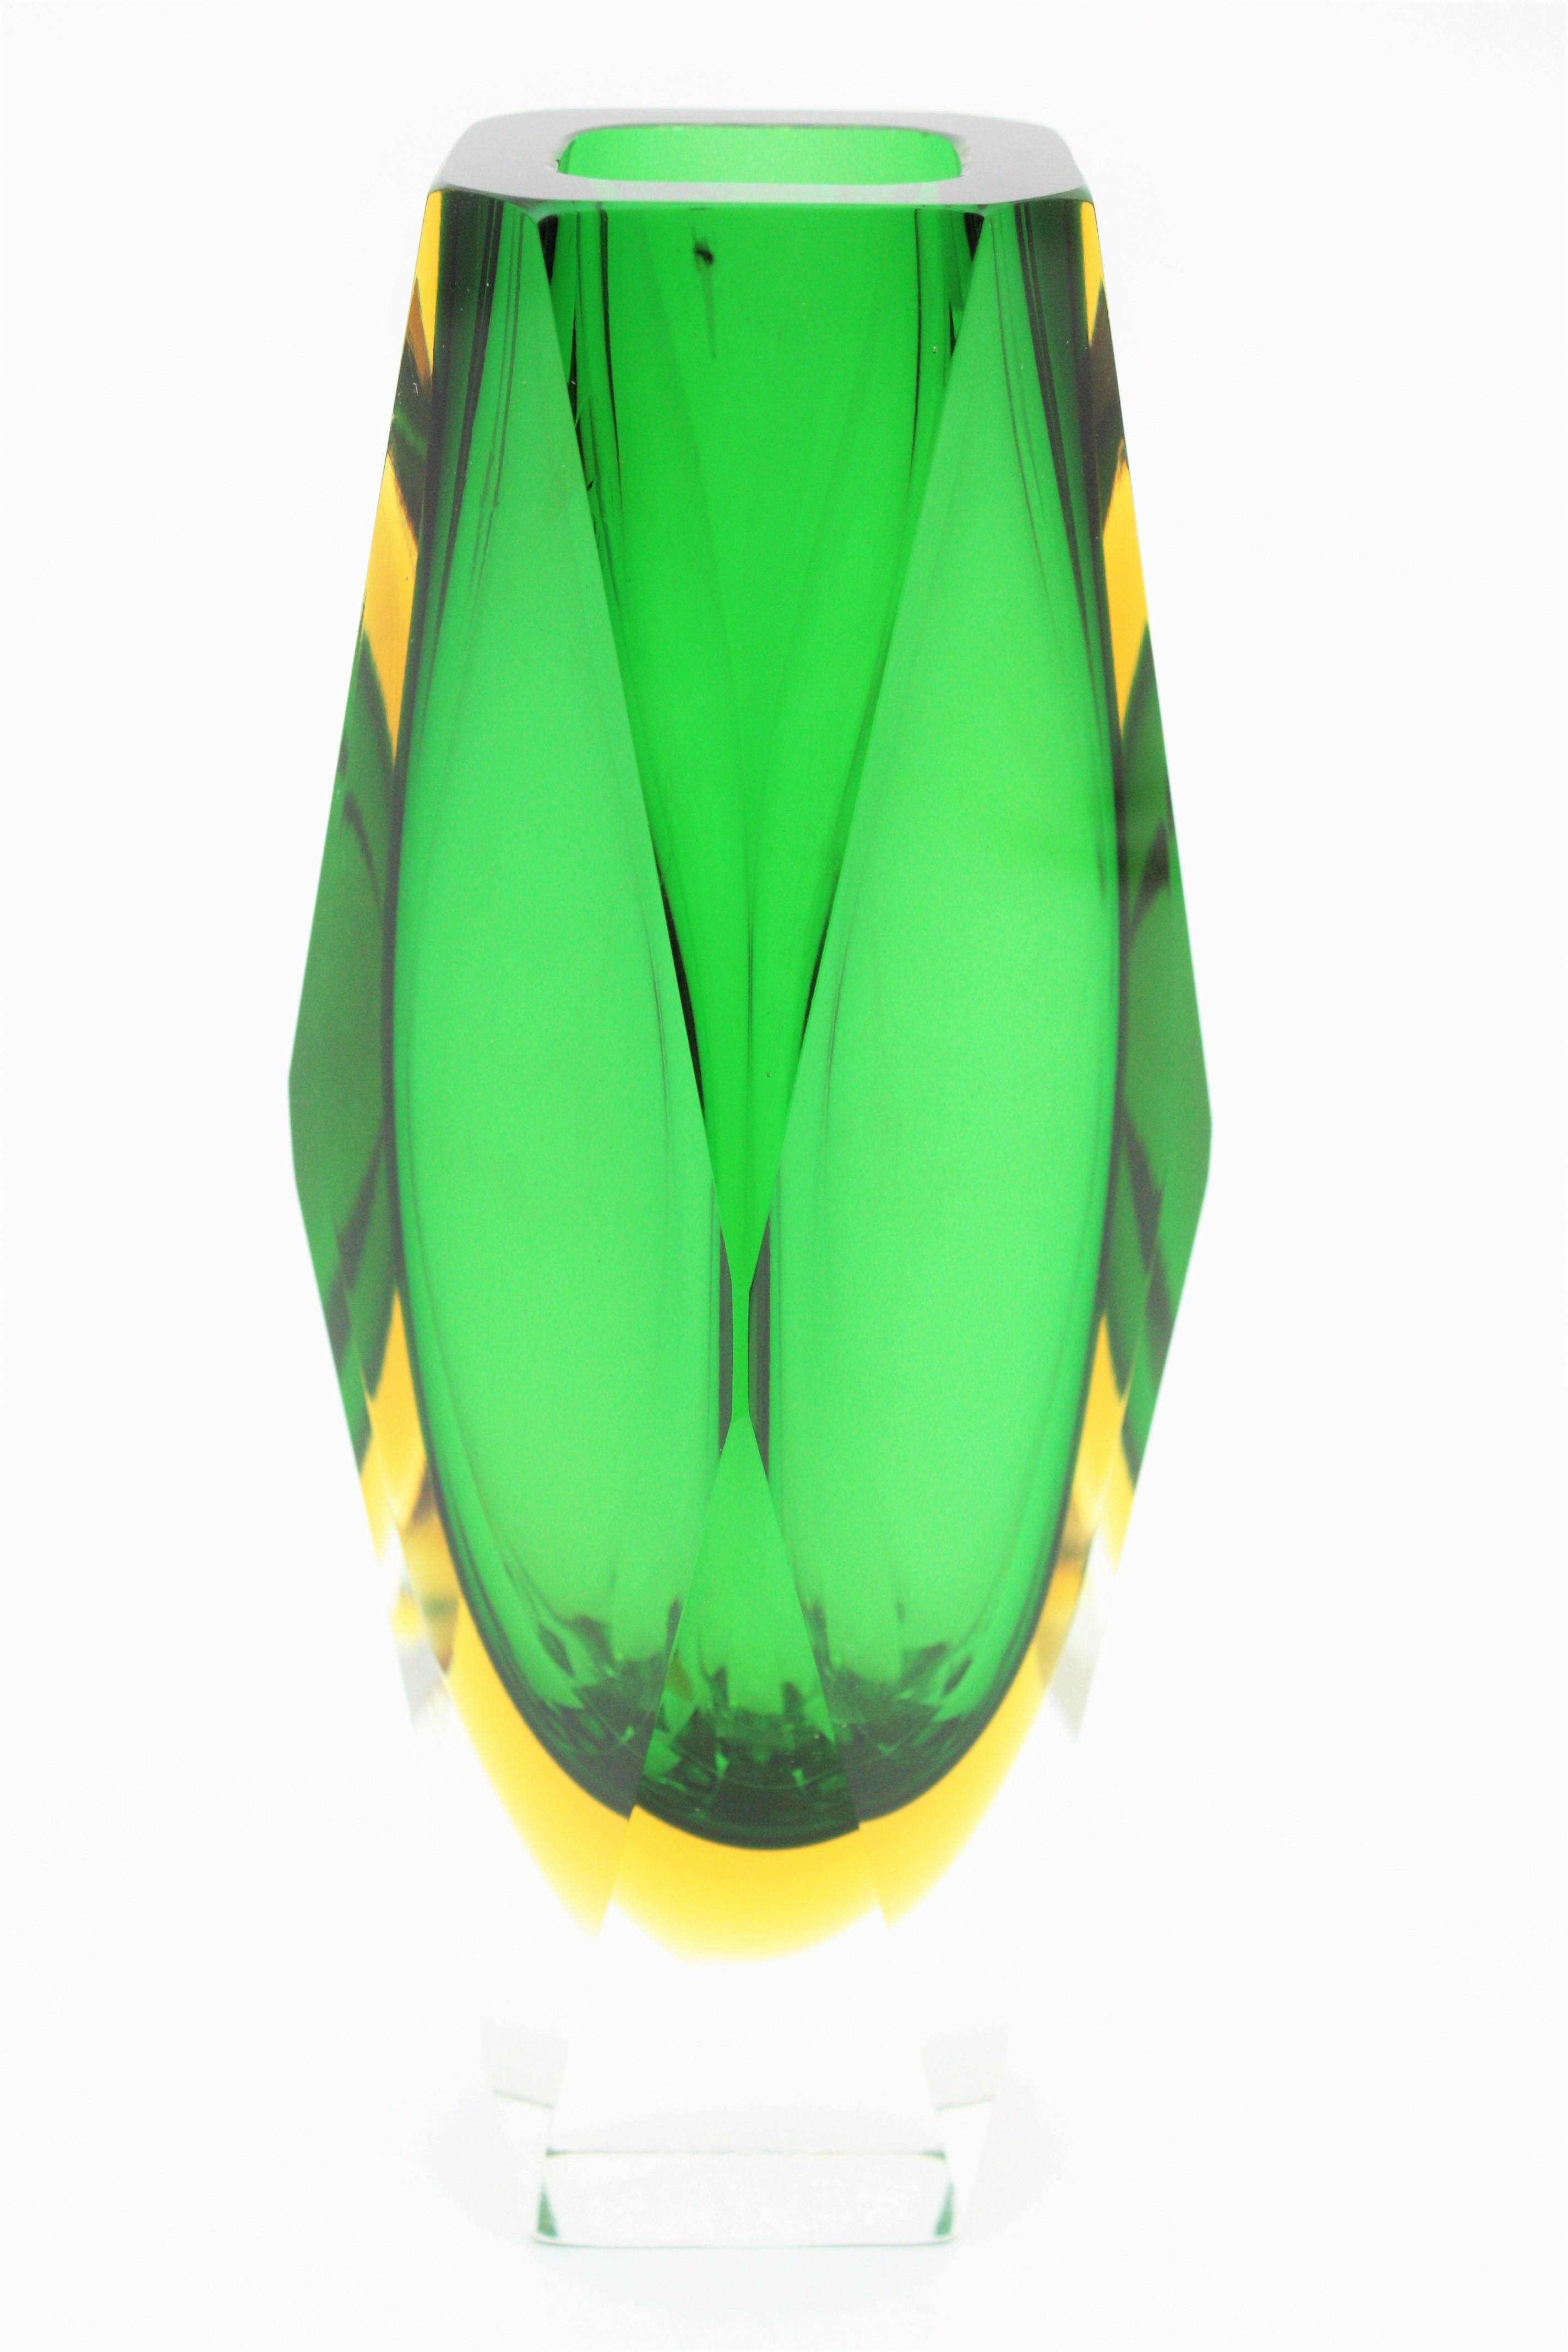 Midcentury Mandruzzato Faceted Murano Glass Emerald Green & Yellow Sommerso Vase 1